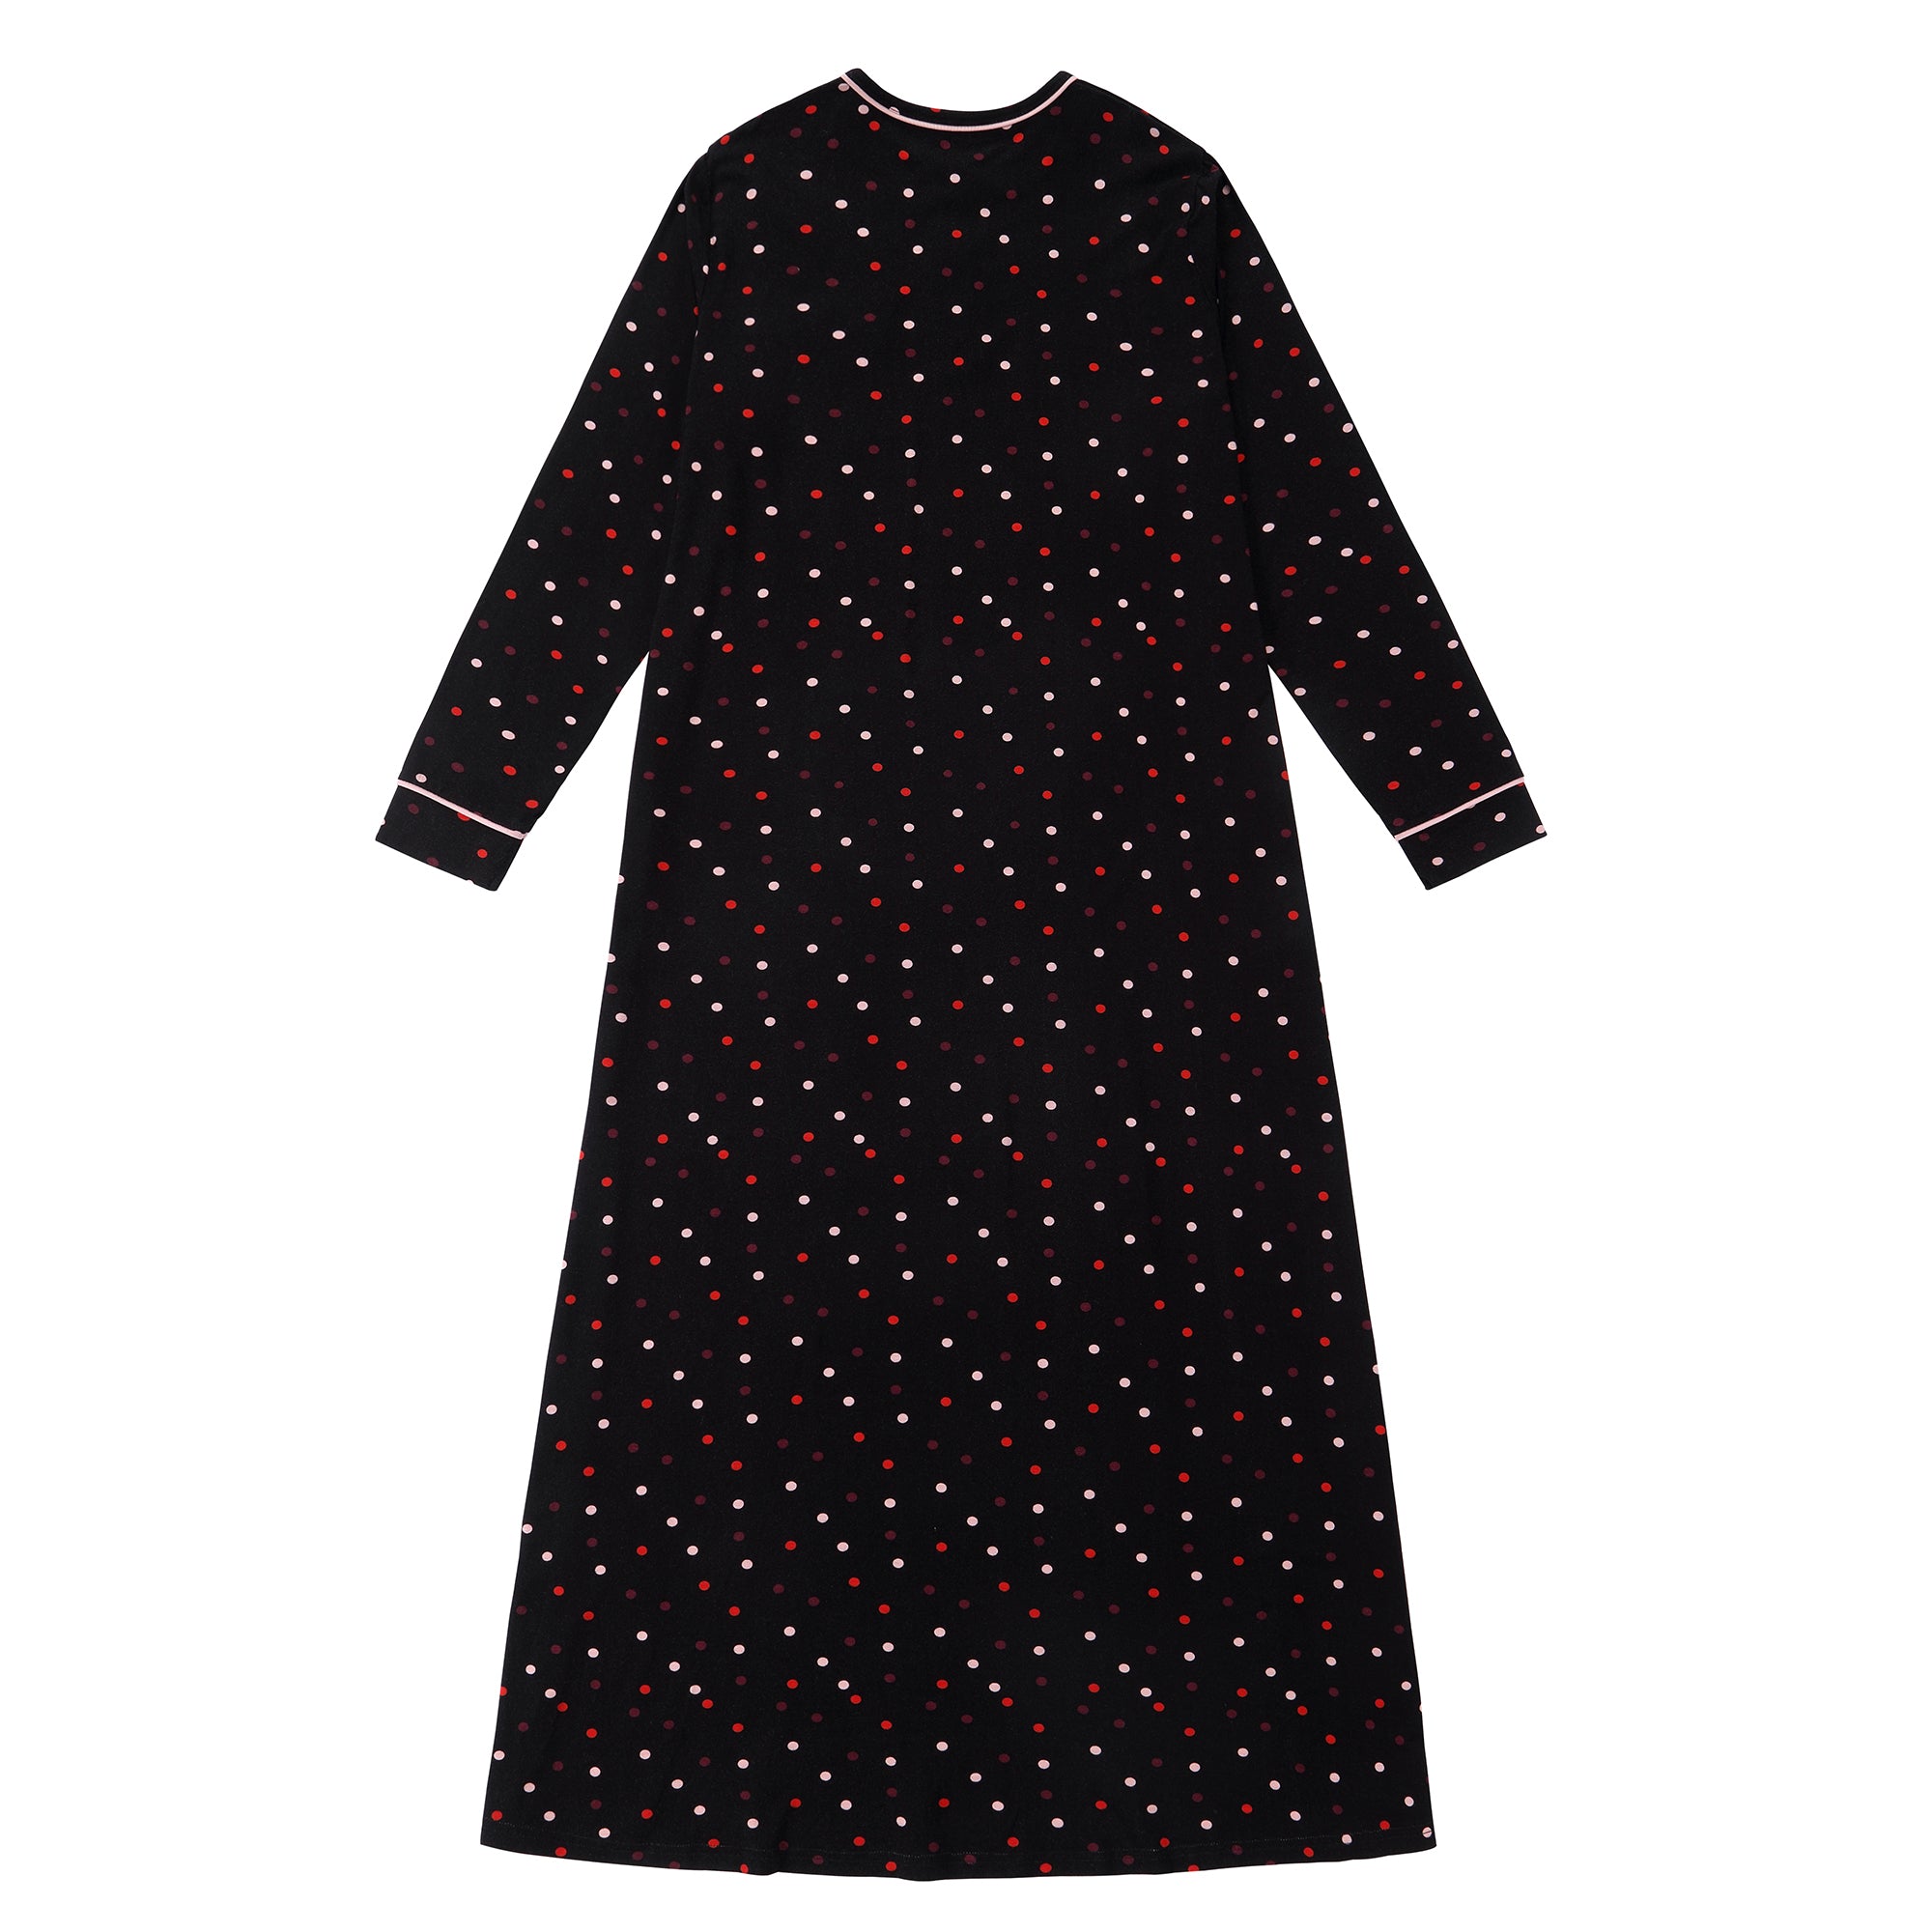 Black Colorful Polka Dot Nightgown